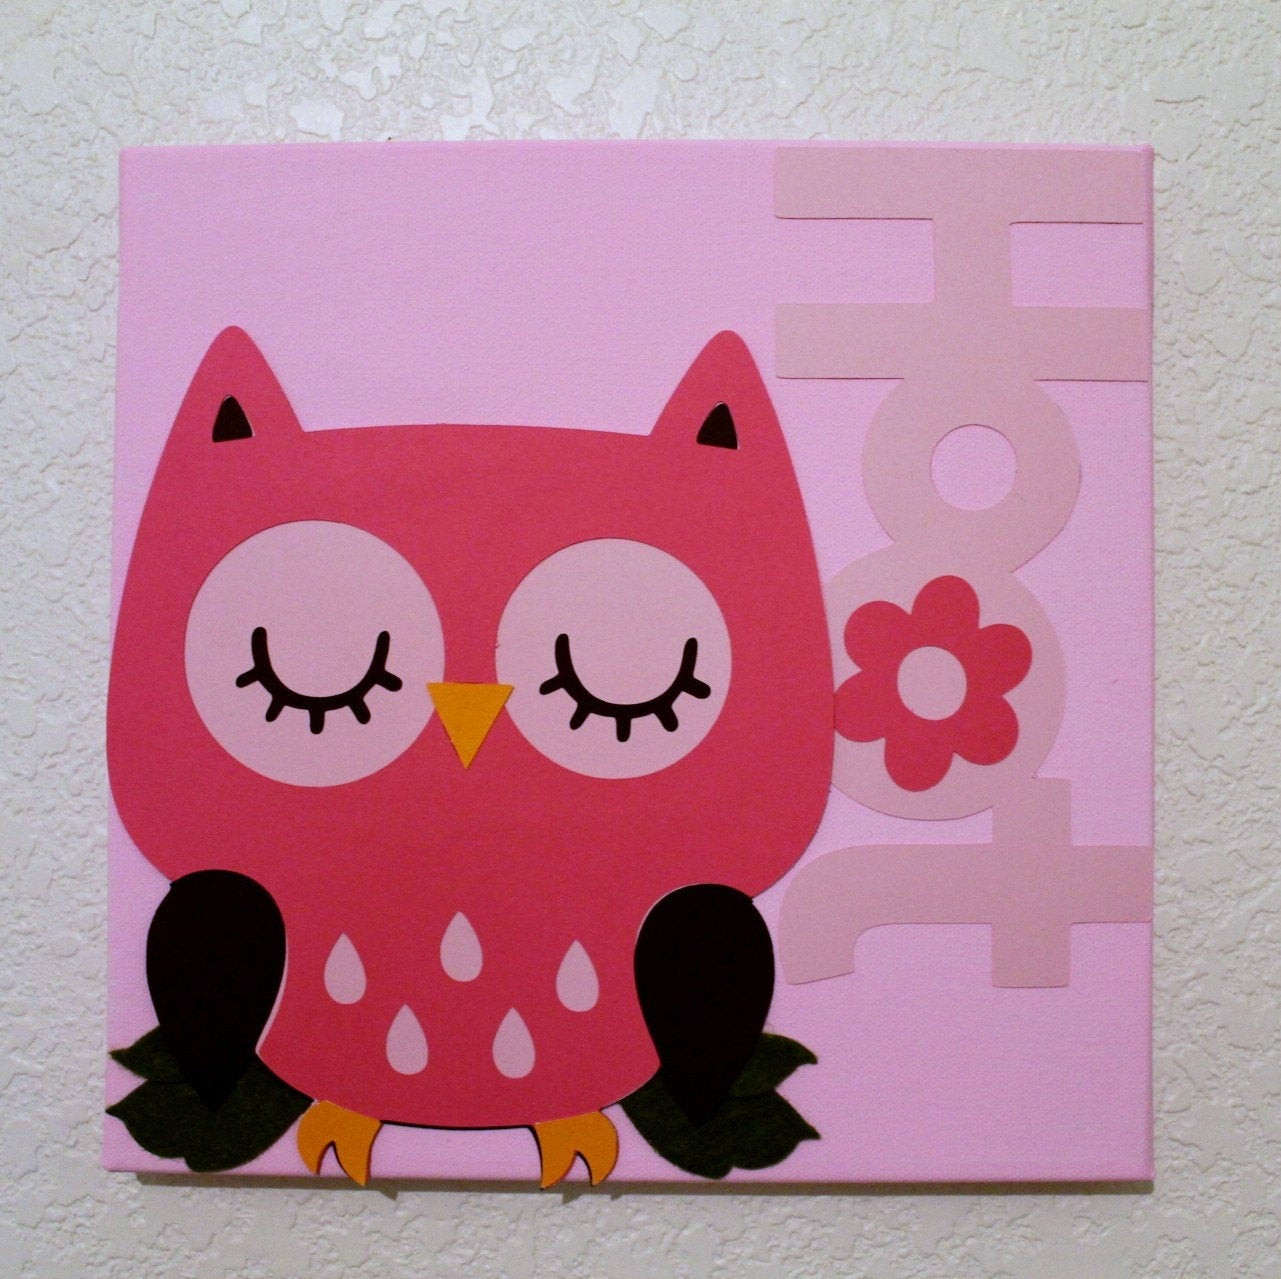 Owl Decor For Kids Room
 Wall Decor Pink Owl Baby Nursery Kids Children Room Decor